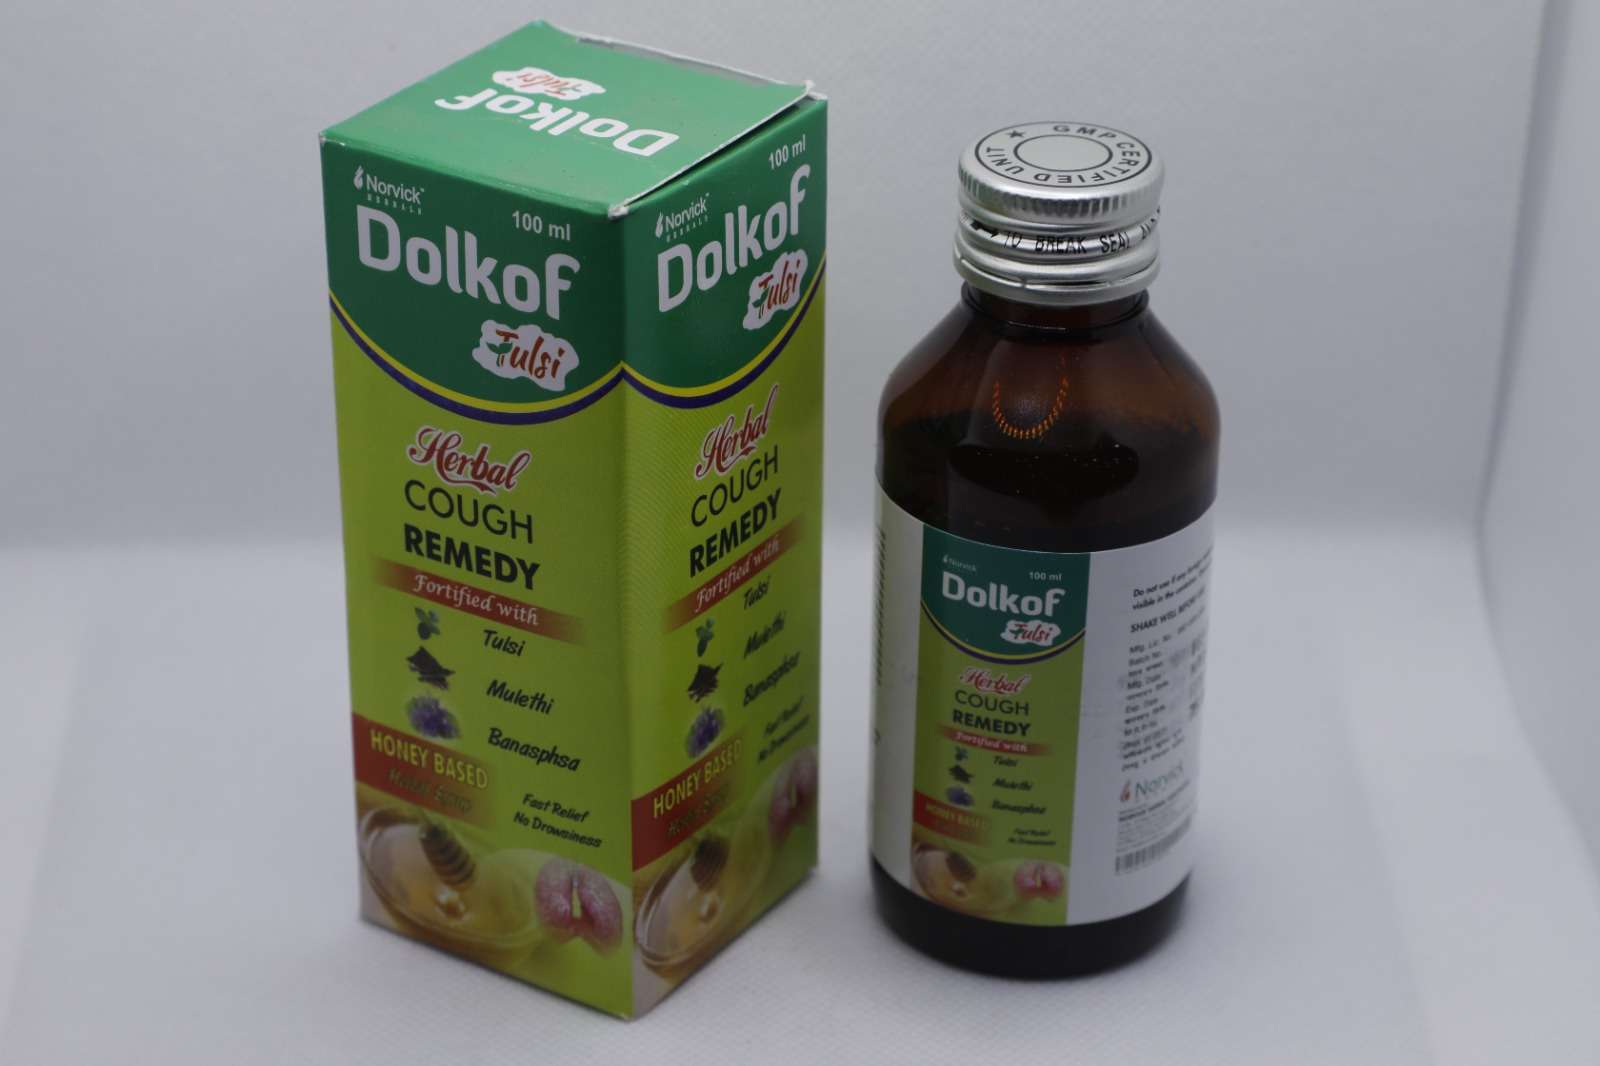 ayurvedic honey base cough syrup